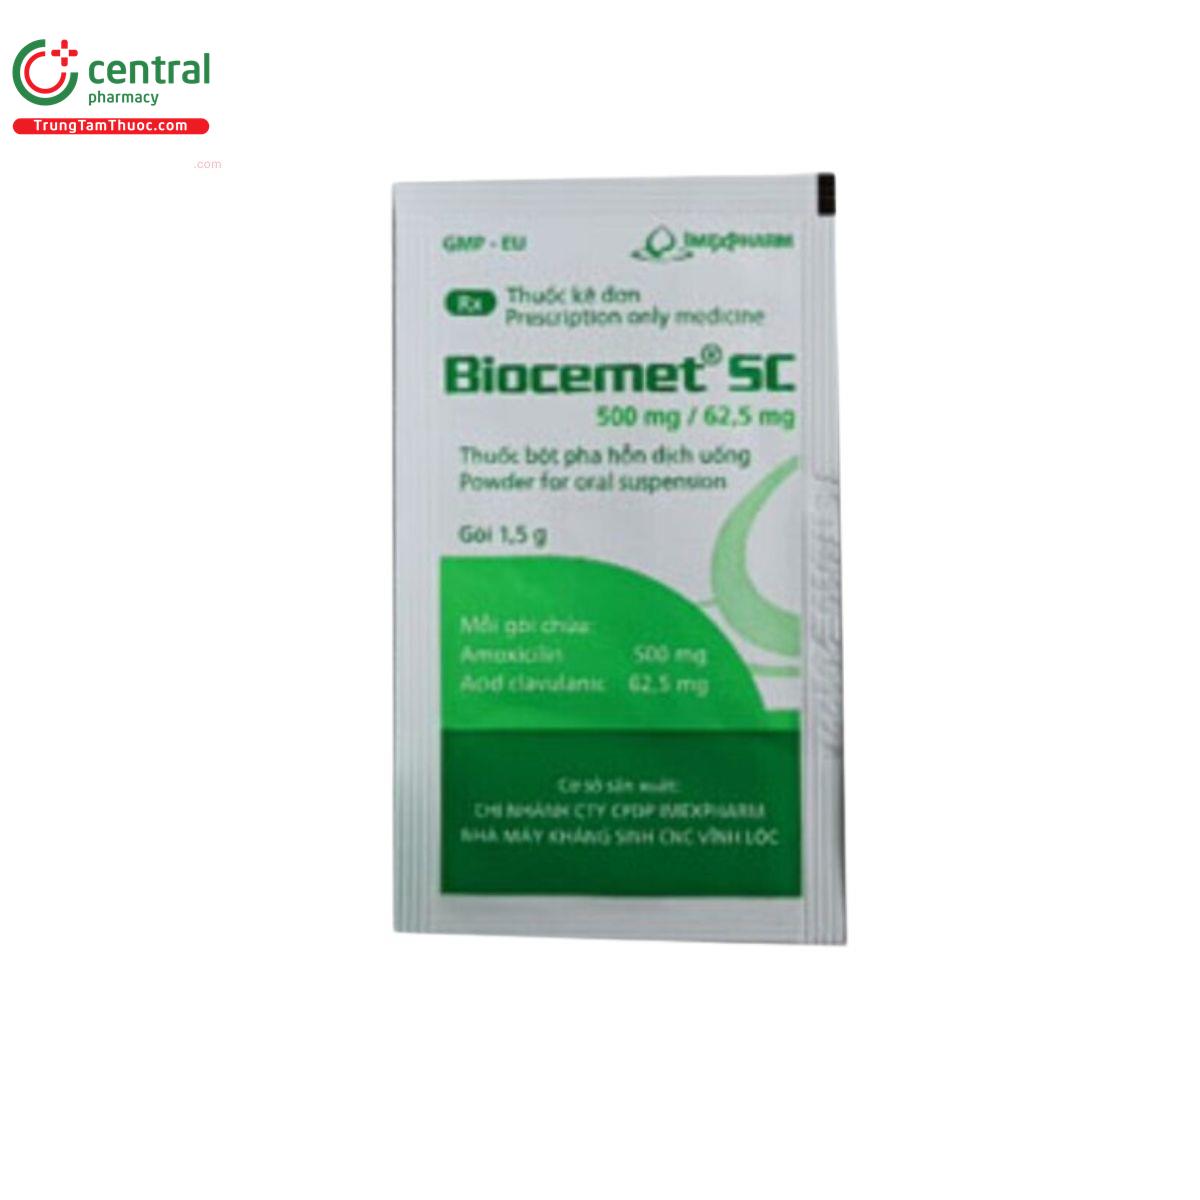 thuoc biocemet sc 500 625 1 N5137